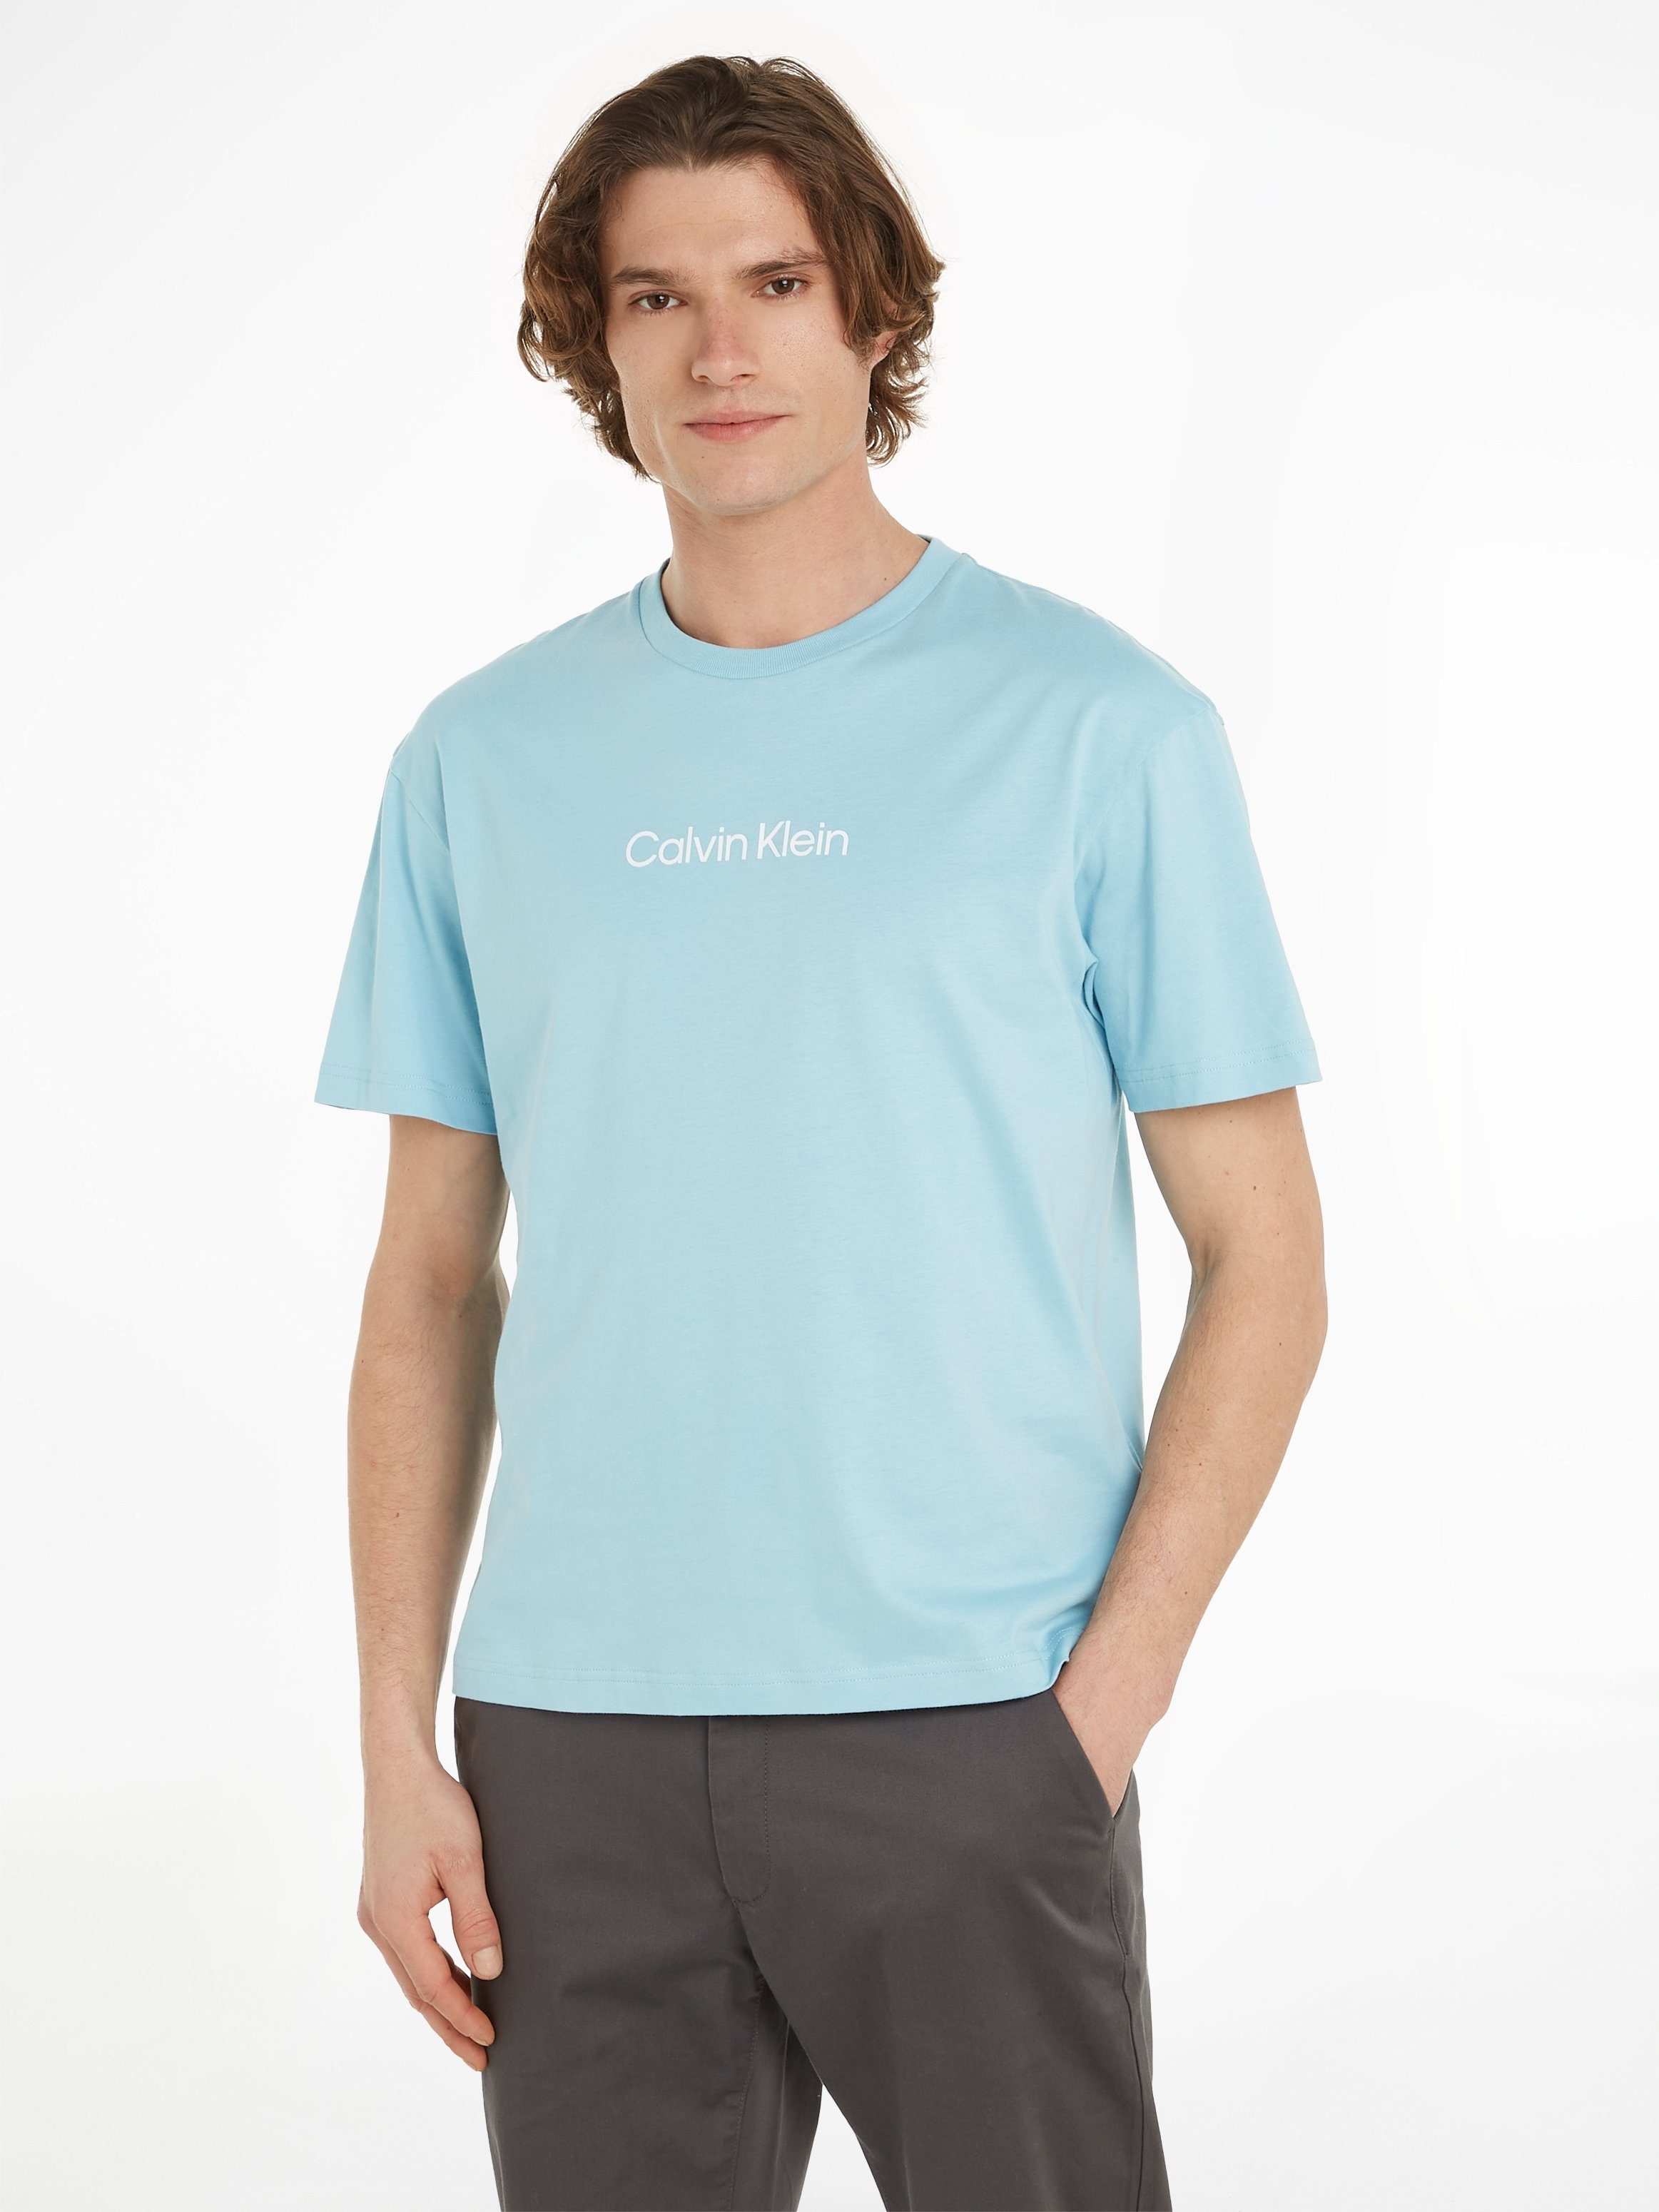 COMFORT HERO aufgedrucktem mit T-Shirt Klein LOGO Tropic Calvin Blue T-SHIRT Markenlabel